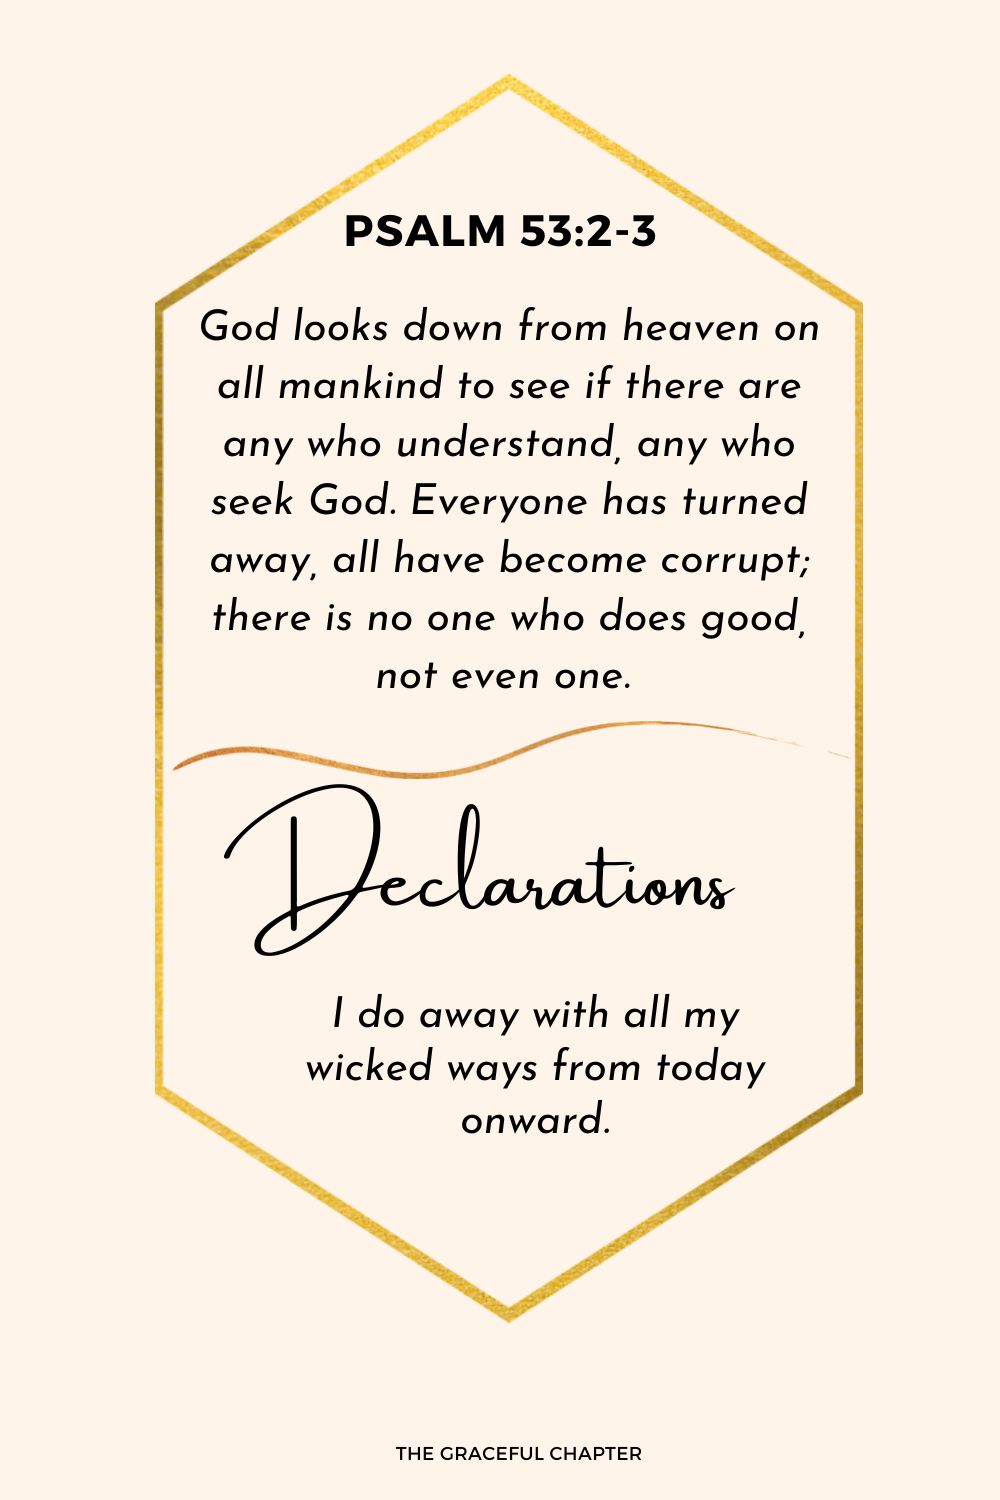 Declaration - Psalm 53:2-3